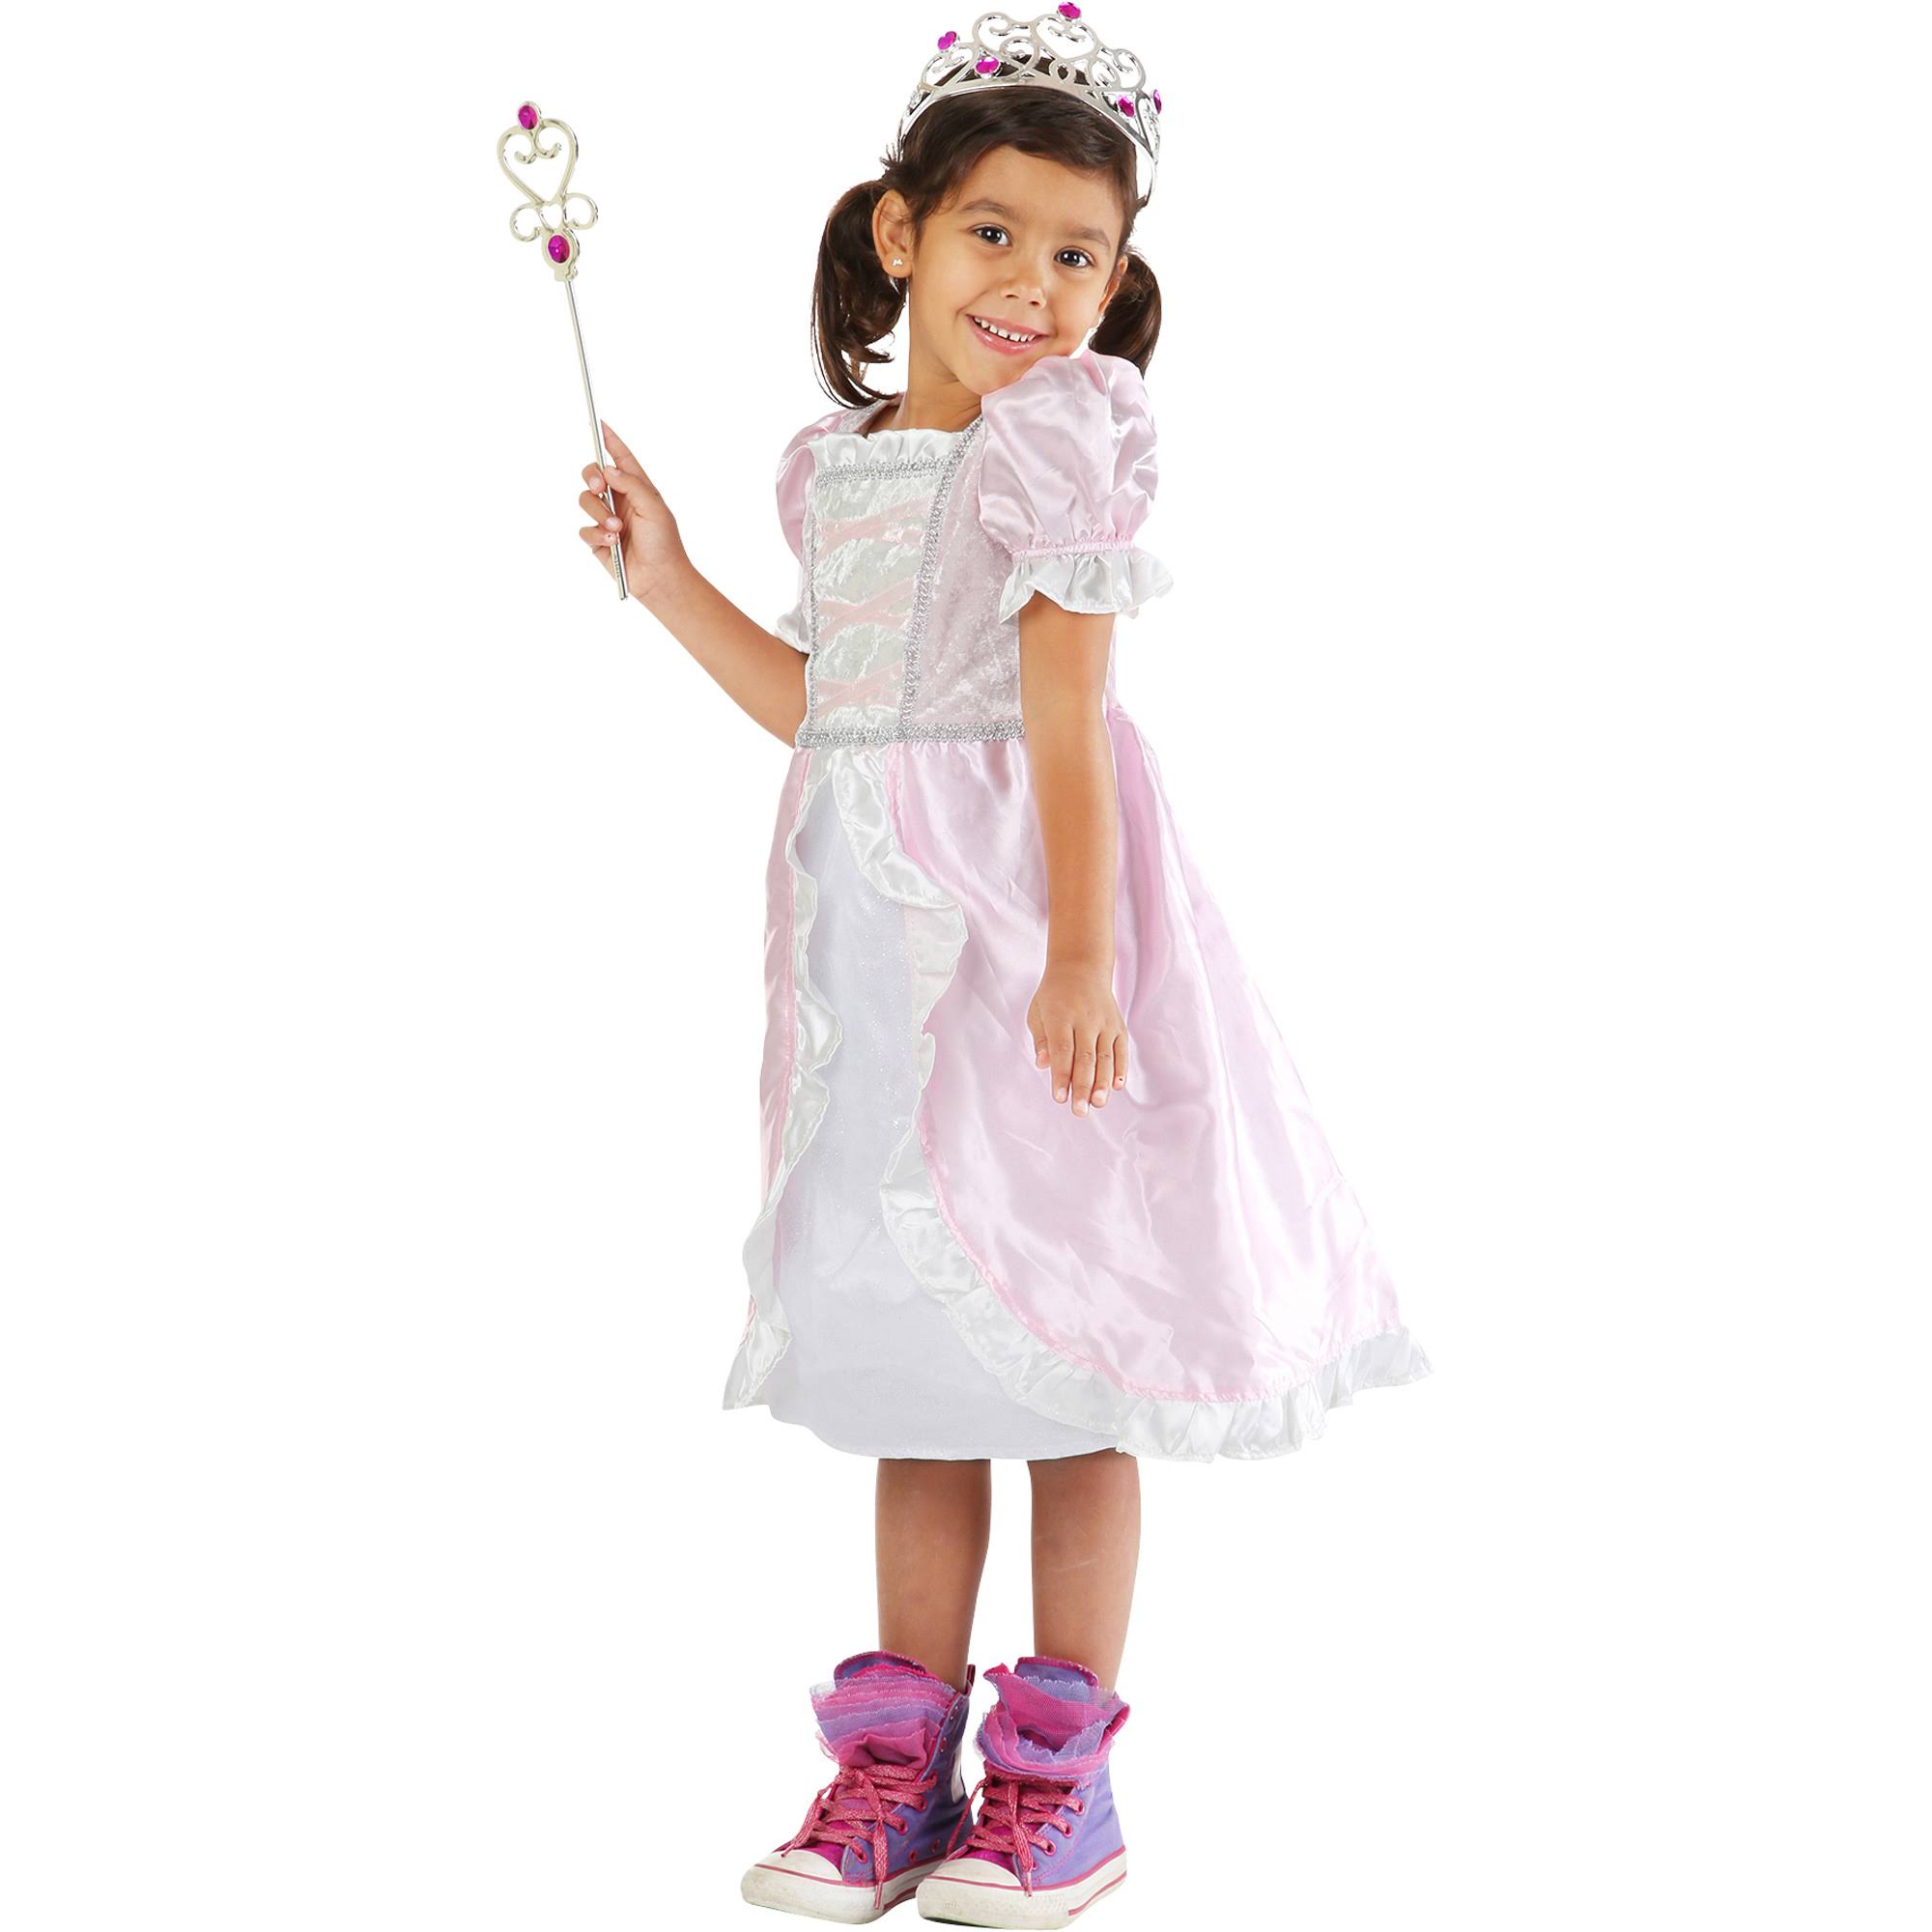 Melissa & Doug 4785 Princess Role Play Costume Set - Pink, 3-6 years